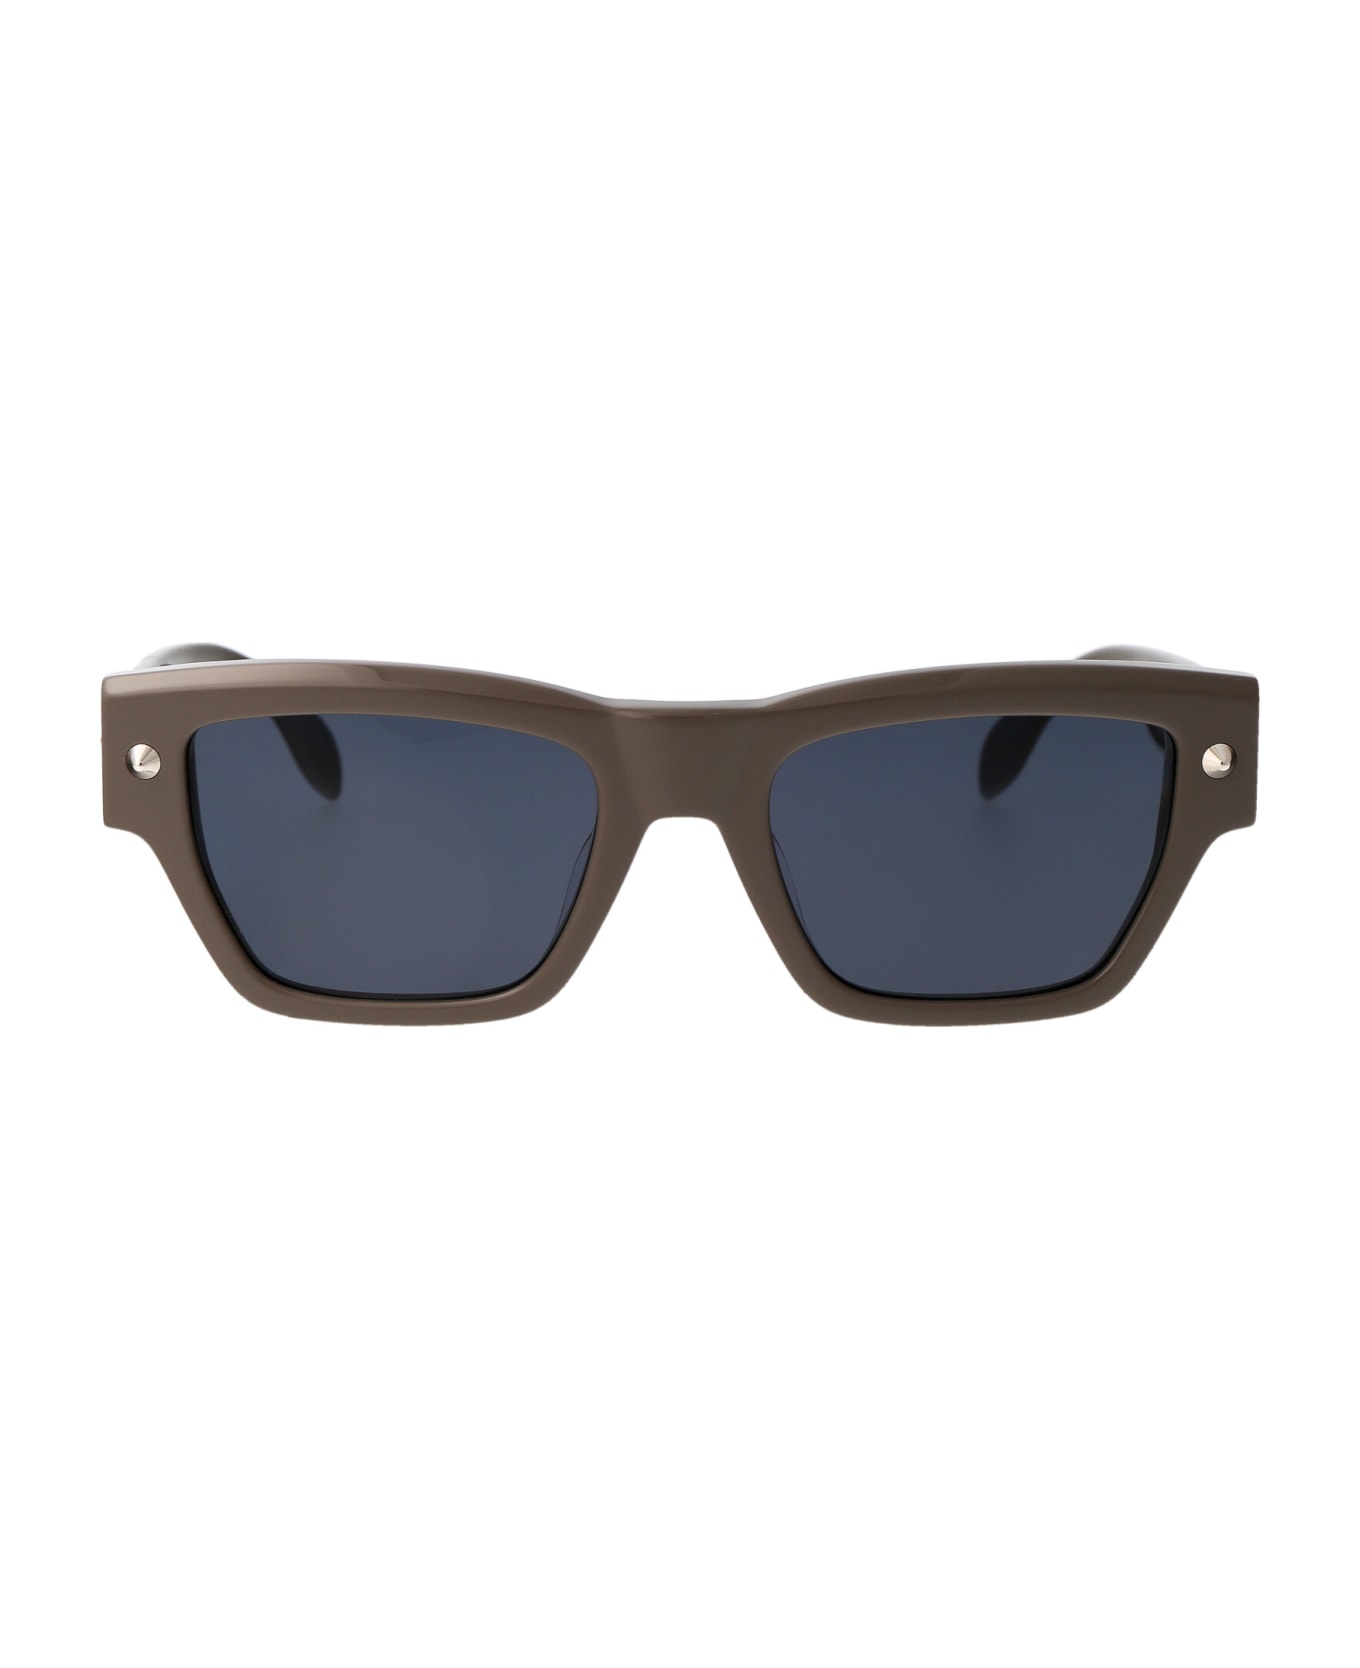 Alexander McQueen Eyewear Am0409s Sunglasses - 003 BROWN BROWN BLUE